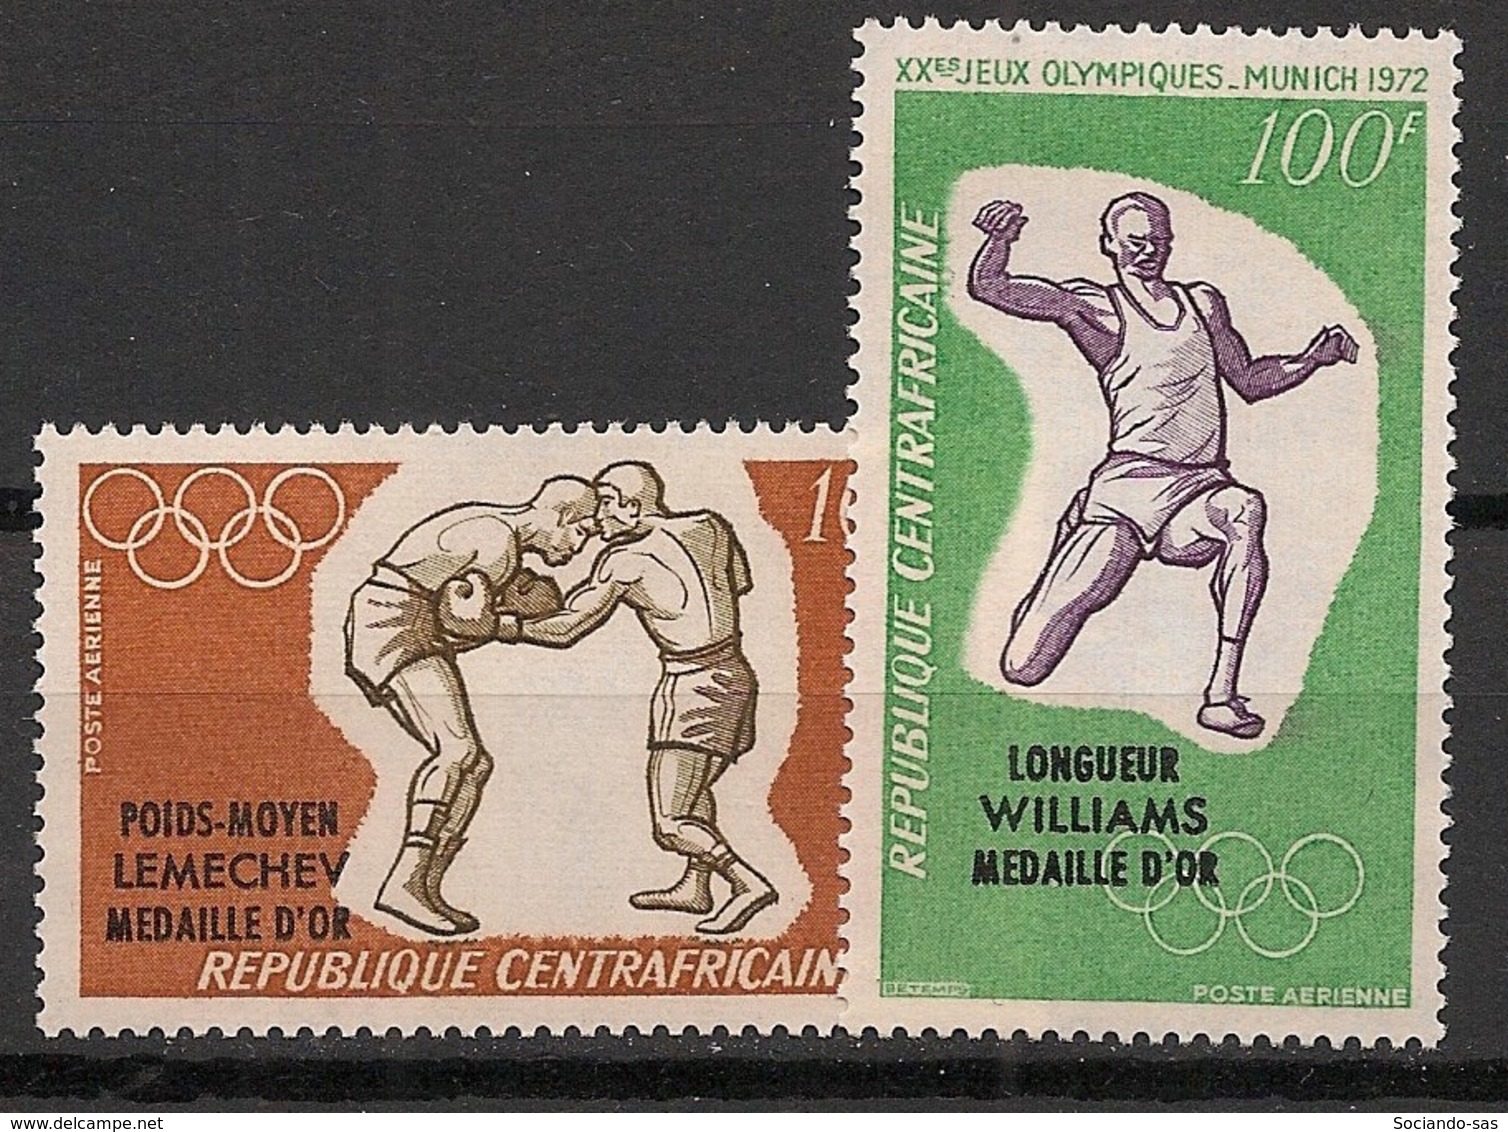 Centrafricaine - 1972 - Poste Aérienne PA N°Yv. 105 à 106 - Olympics / Munich 72 - Neuf Luxe ** / MNH / Postfrisch - Centraal-Afrikaanse Republiek